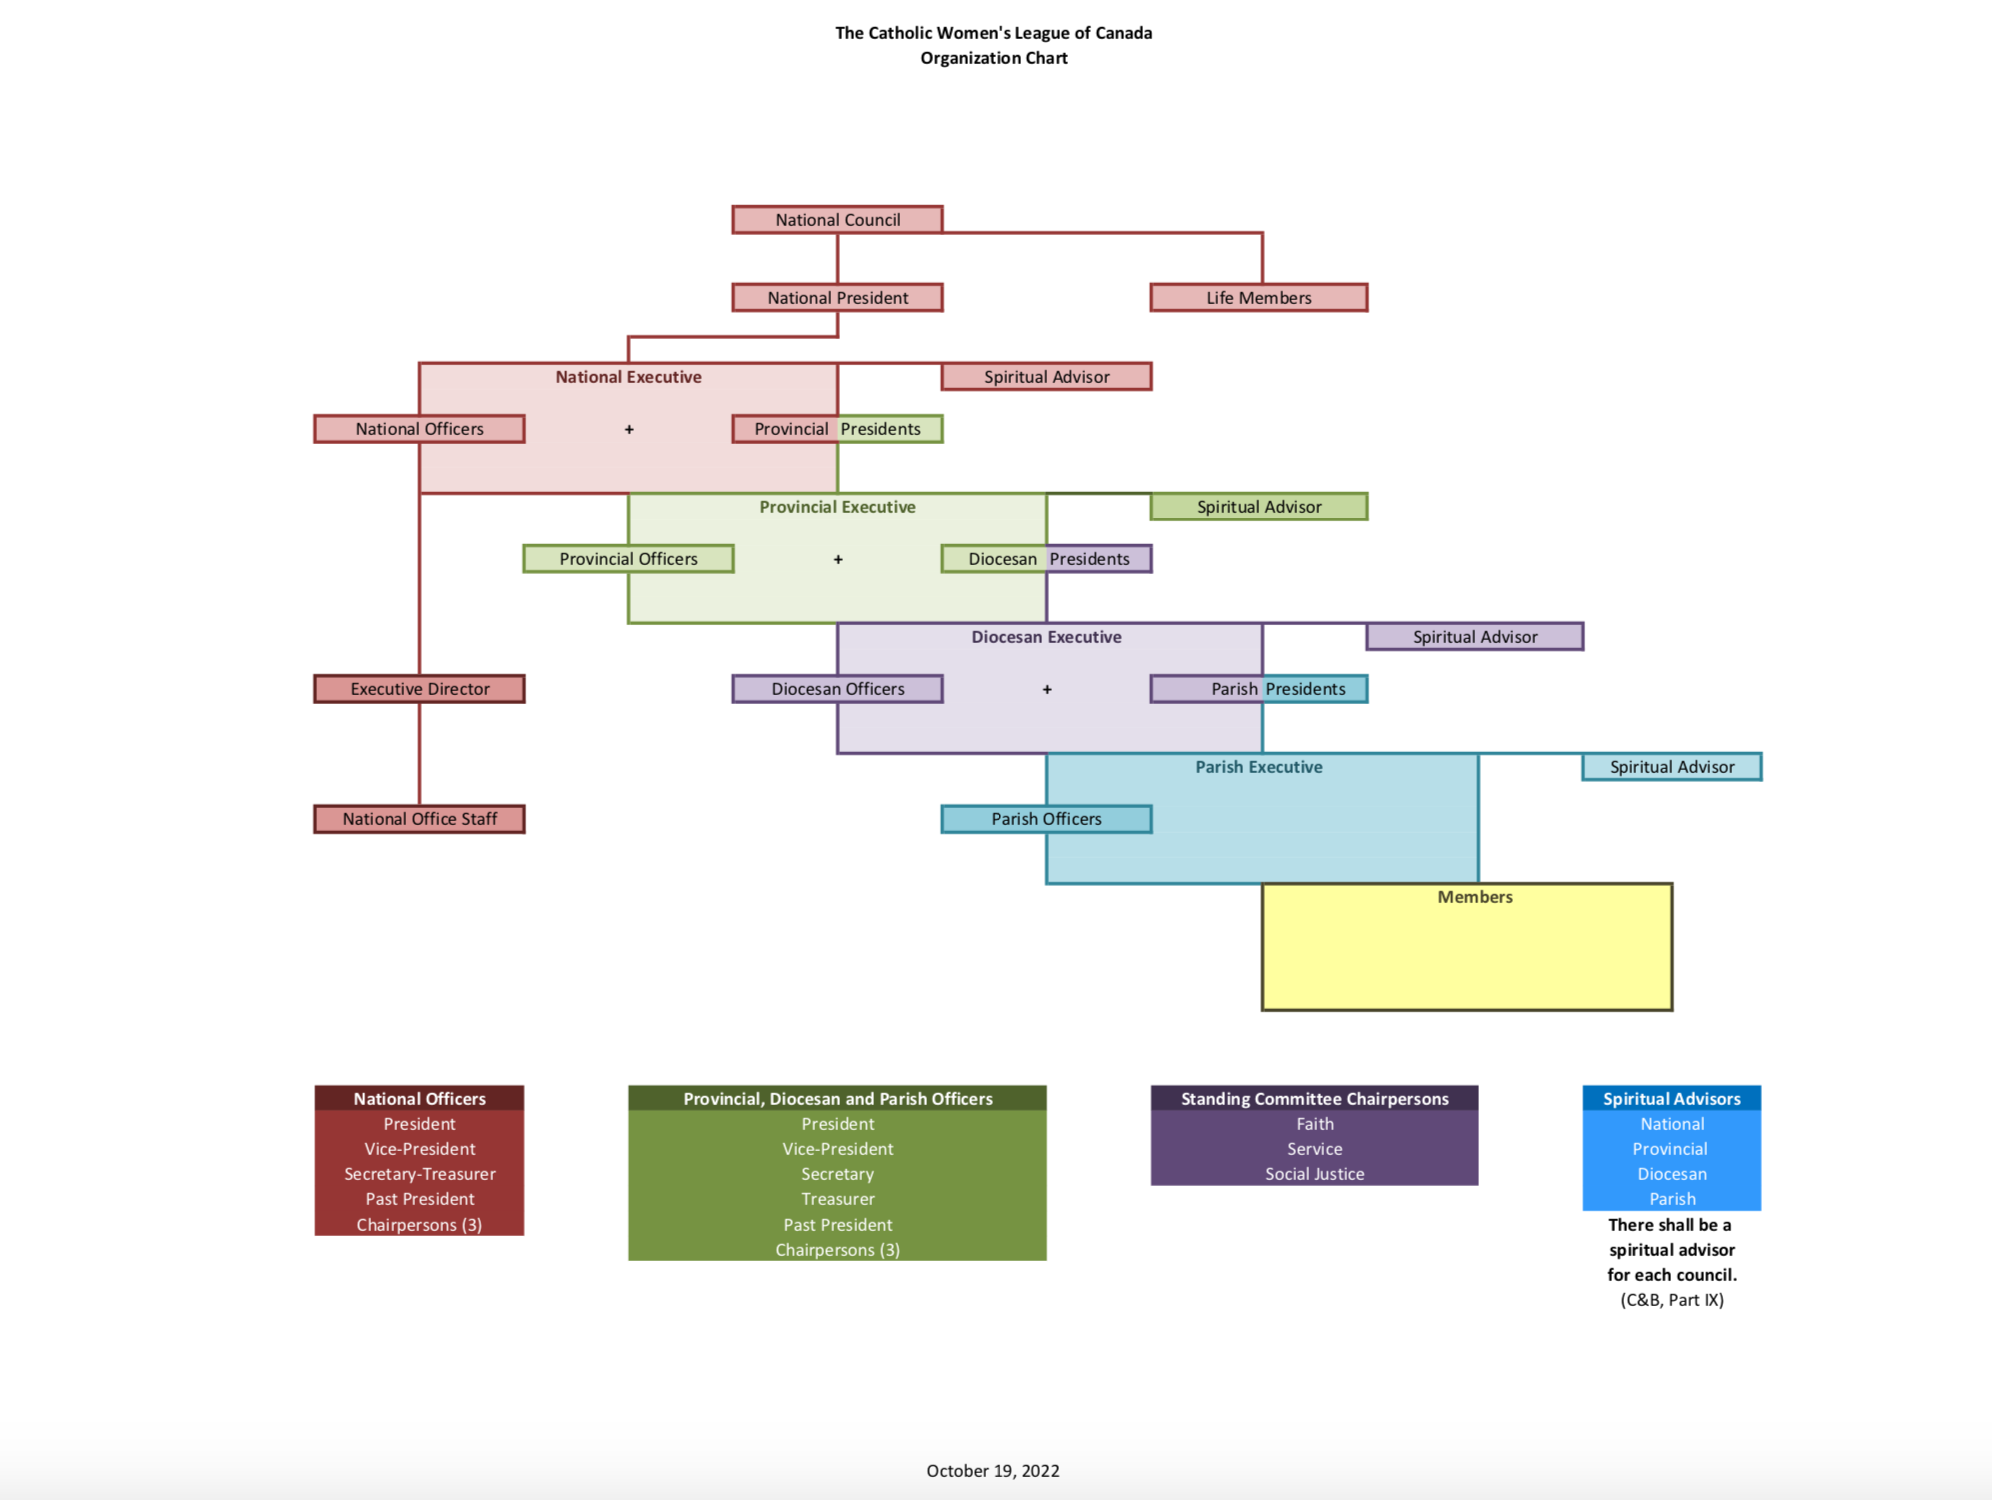 The CWL's Organization Chart